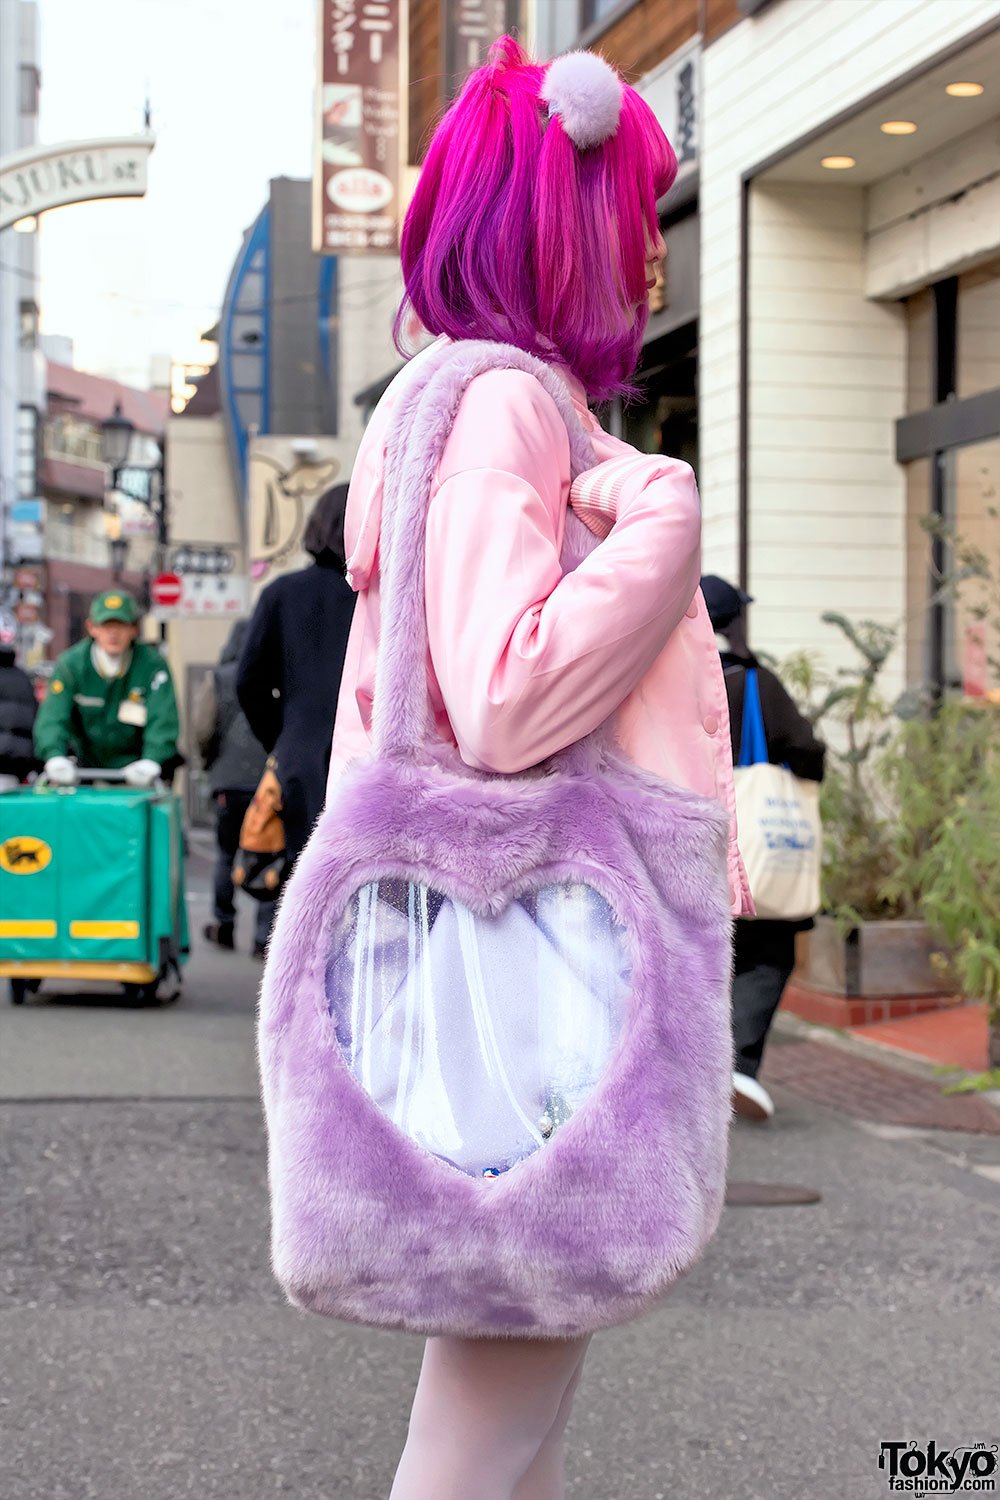 Kawaii Fashion -The Clothing Style Born in Harajuku, Tokyo